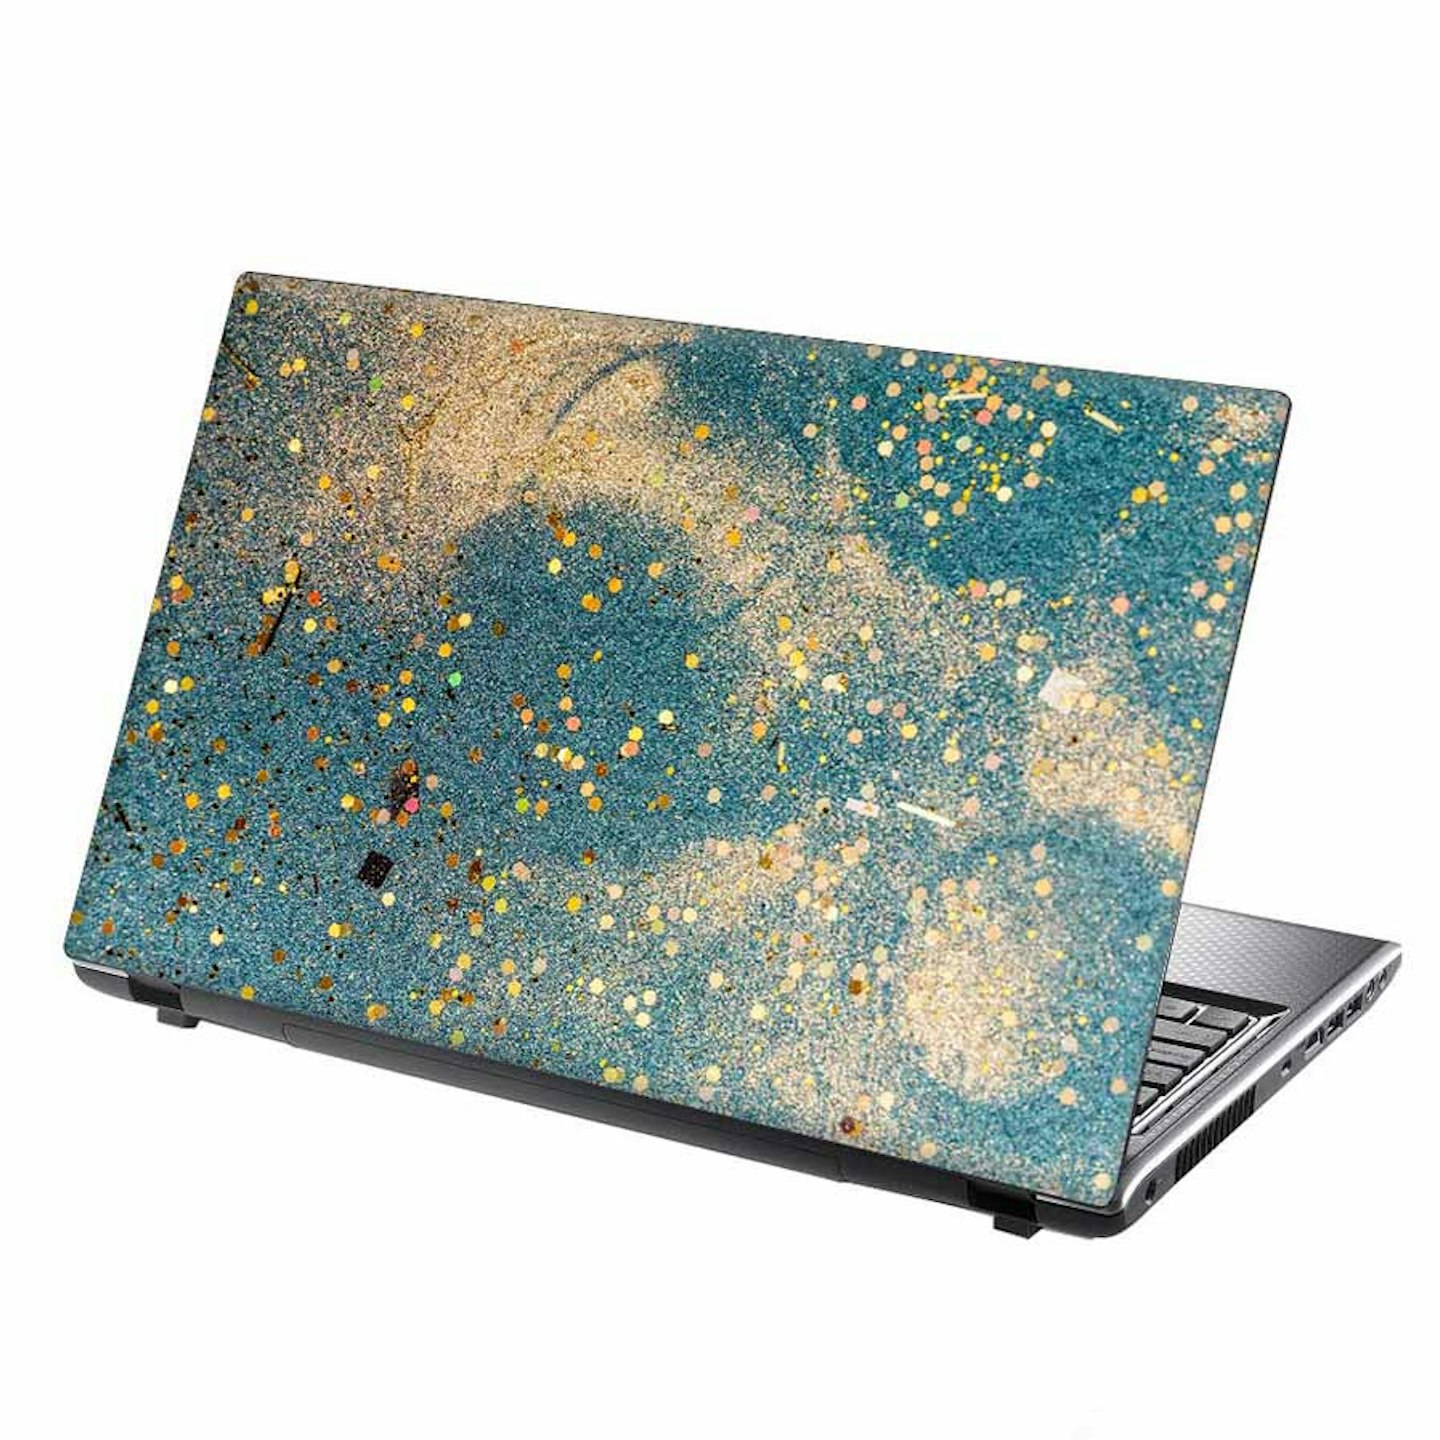 TaylorHe 13-14 inch Laptop Skin Vinyl Decal